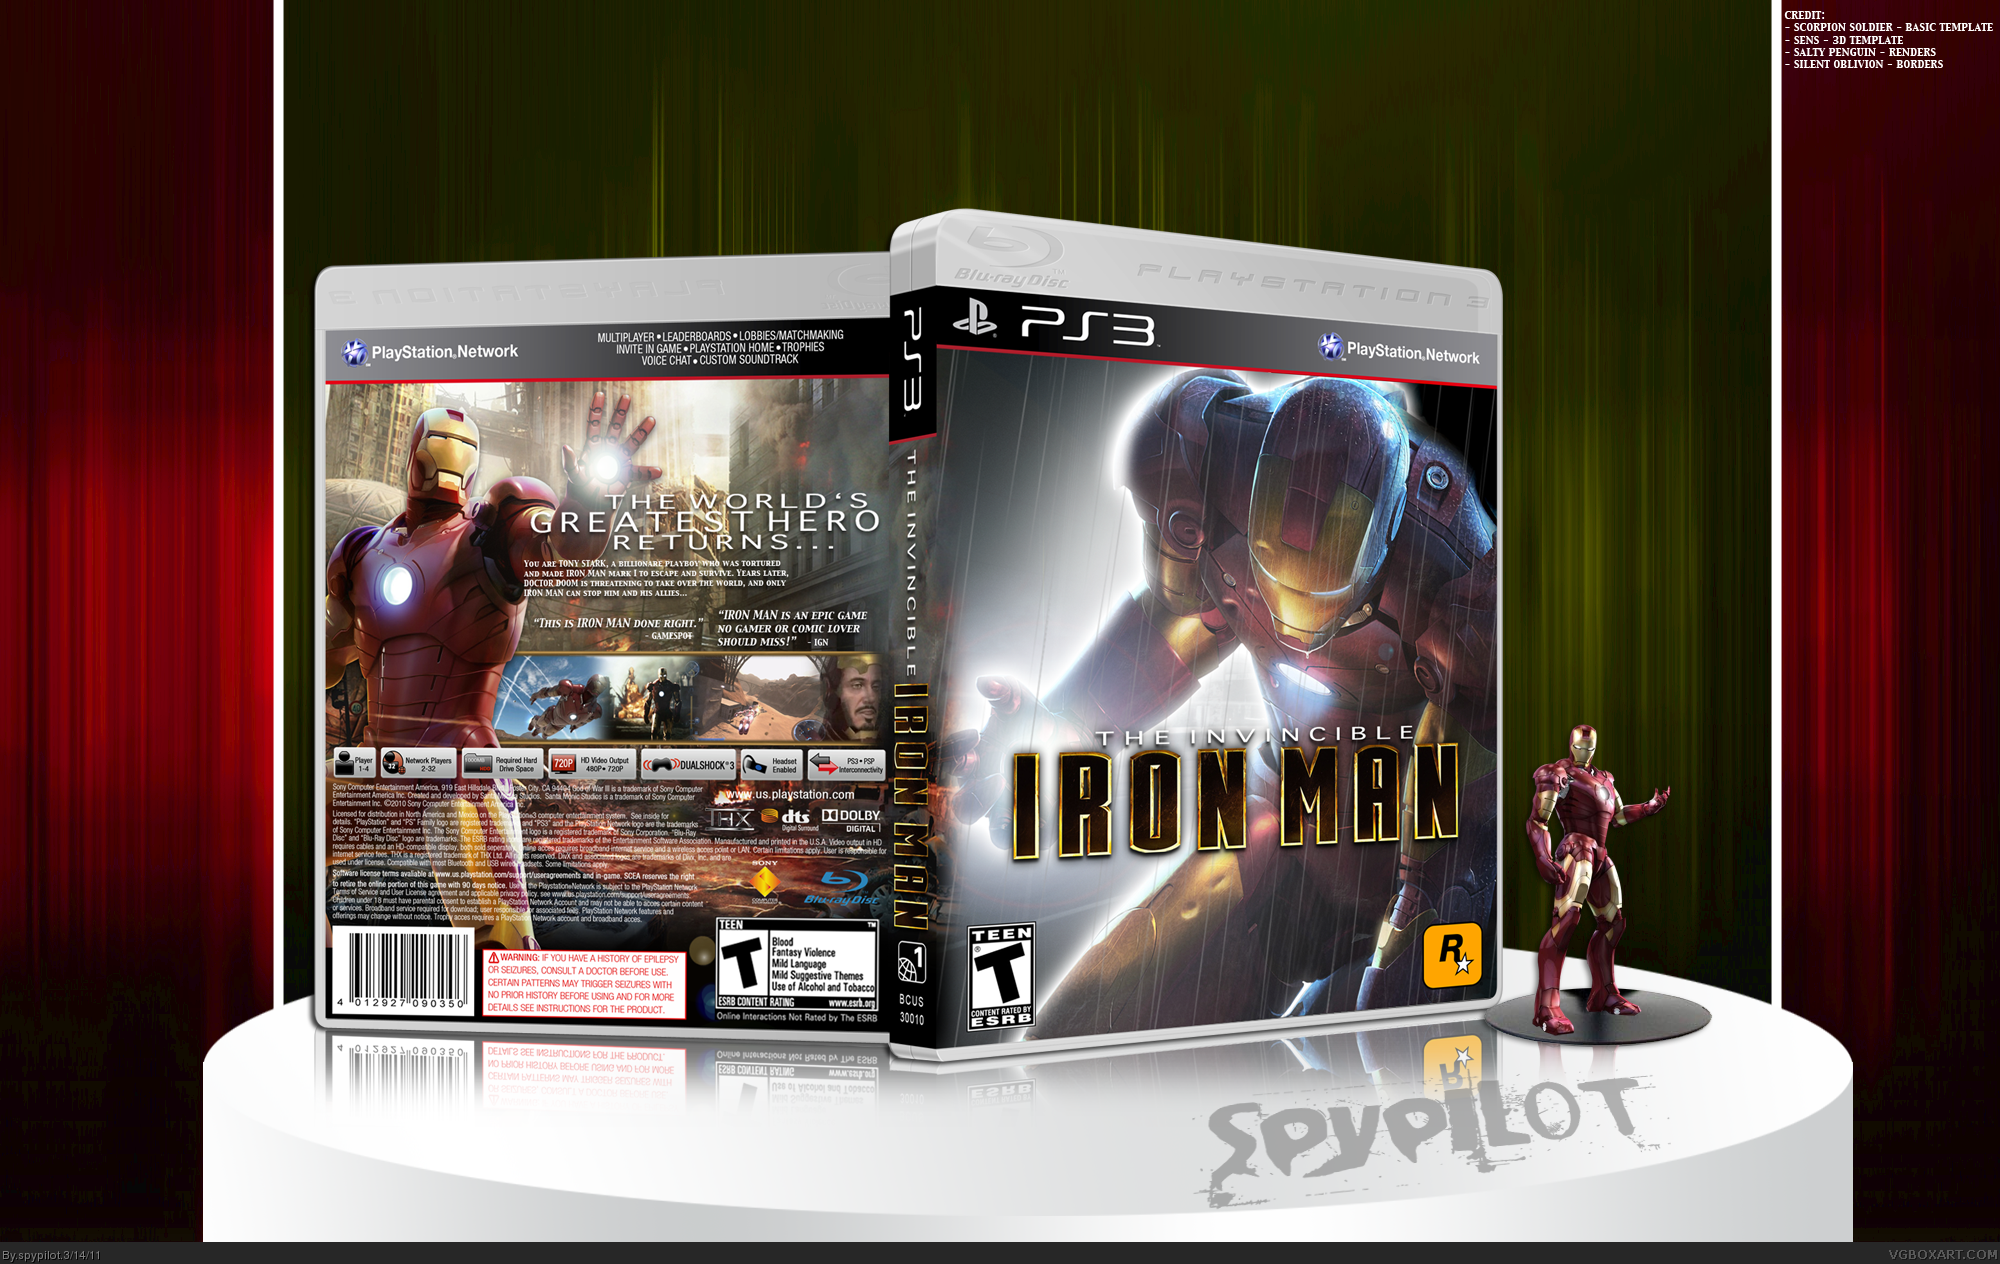 The Invincible Iron Man box cover